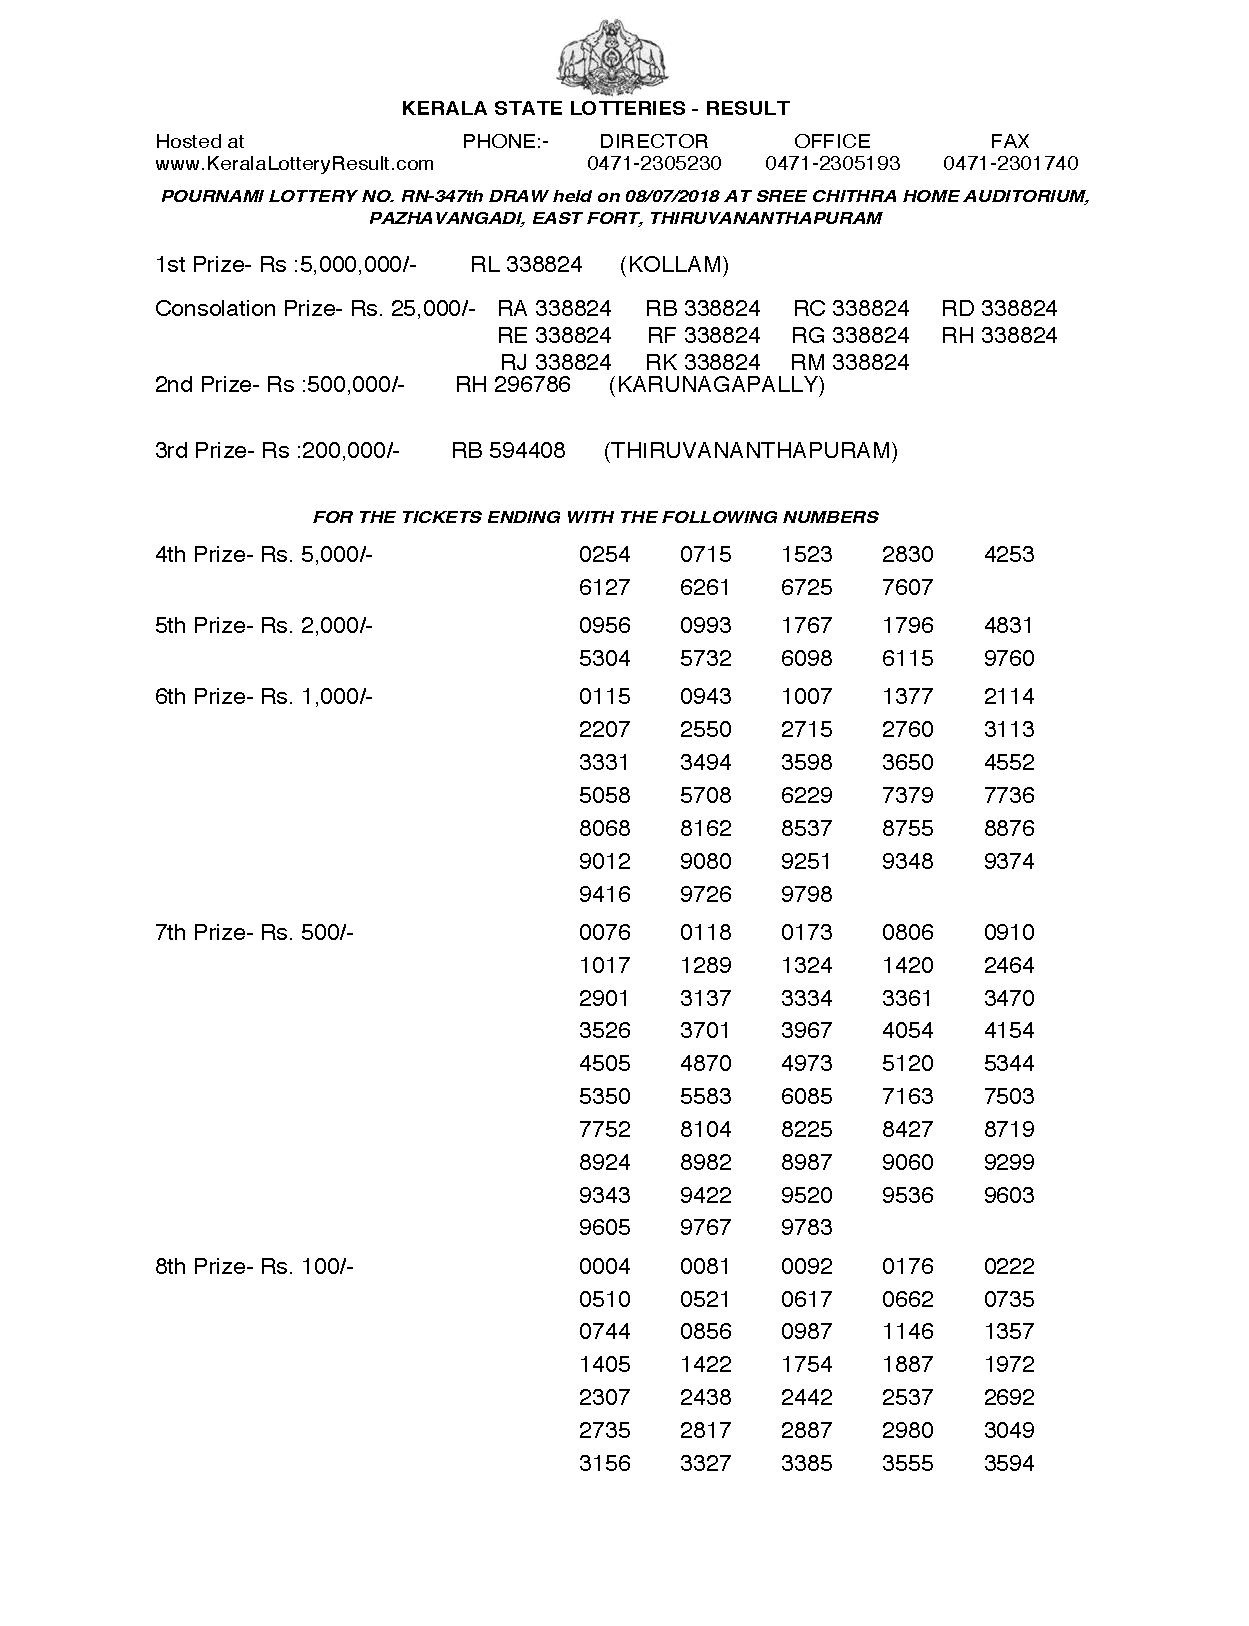 Pournami RN347 Kerala Lottery Results Screenshot: Page 1